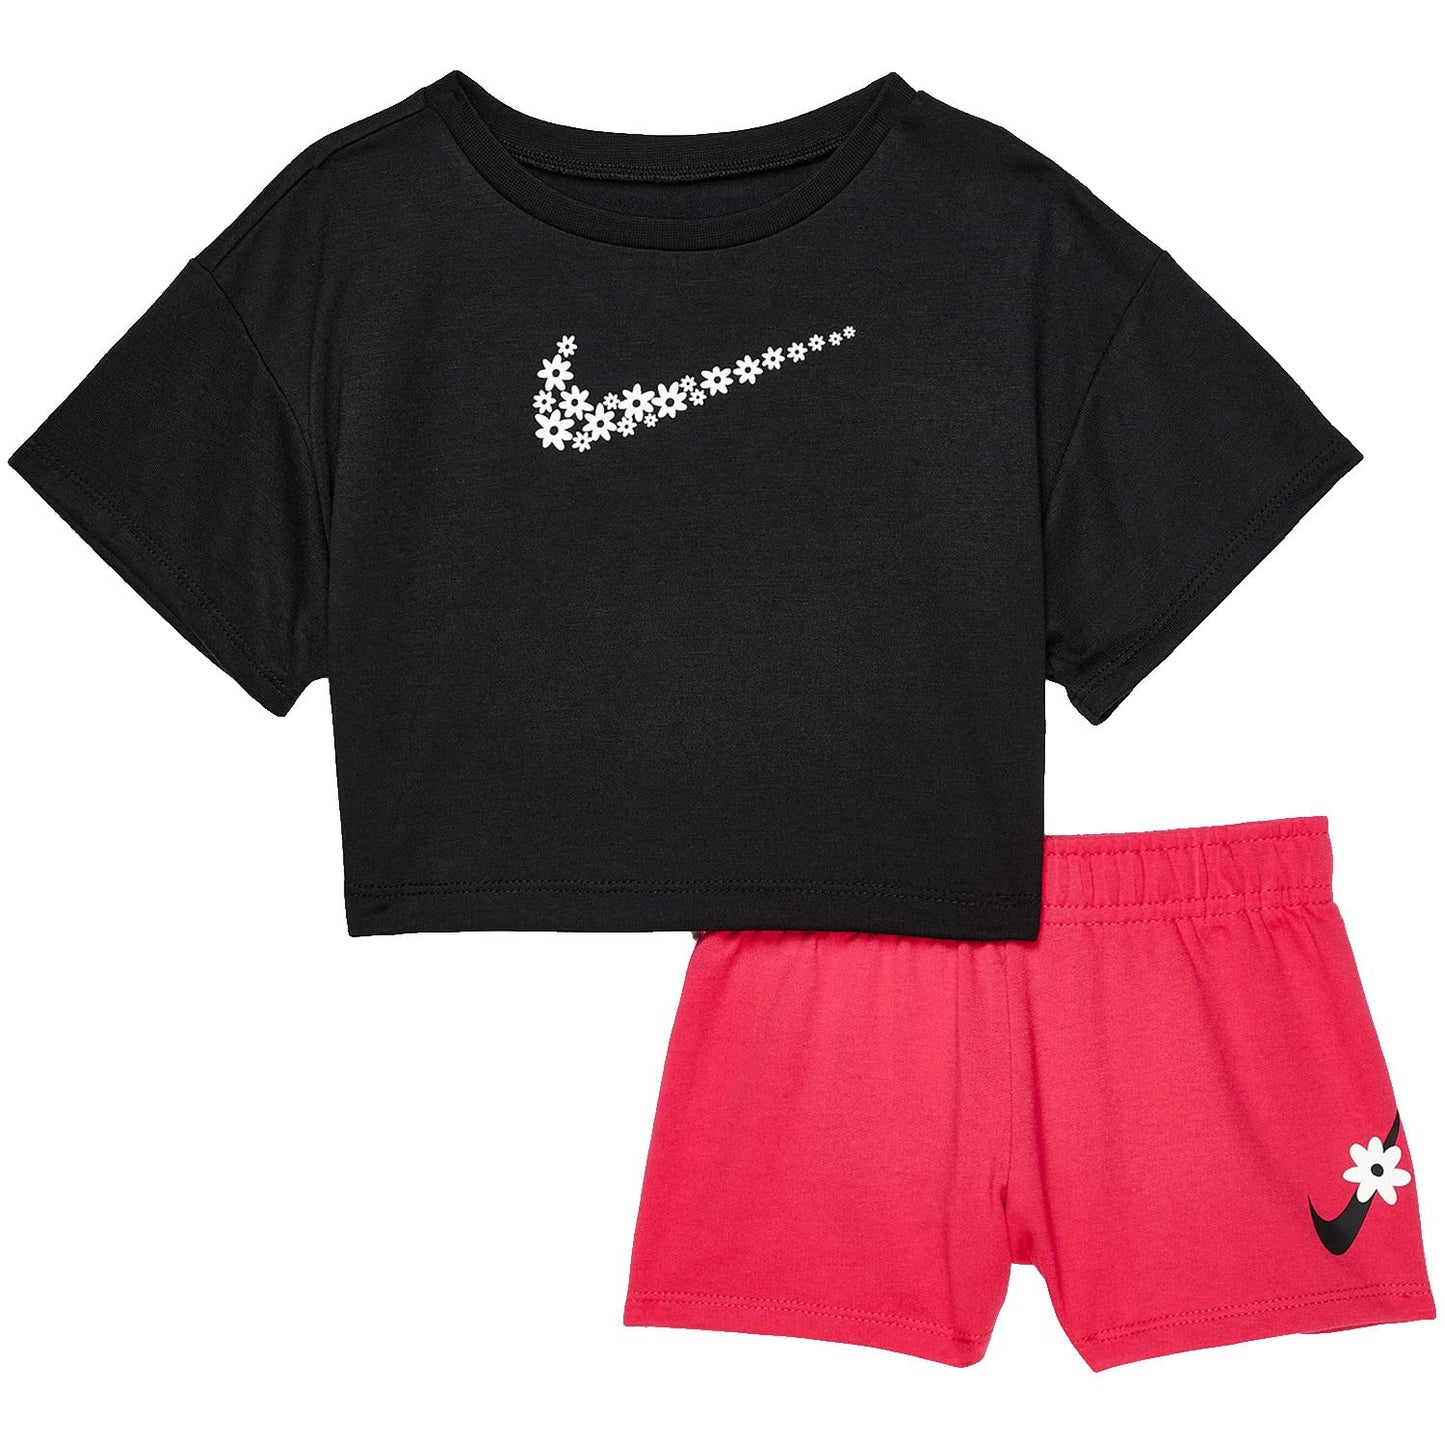 Image 1 of Daisy T-Shirt and Shorts Set (Infant)